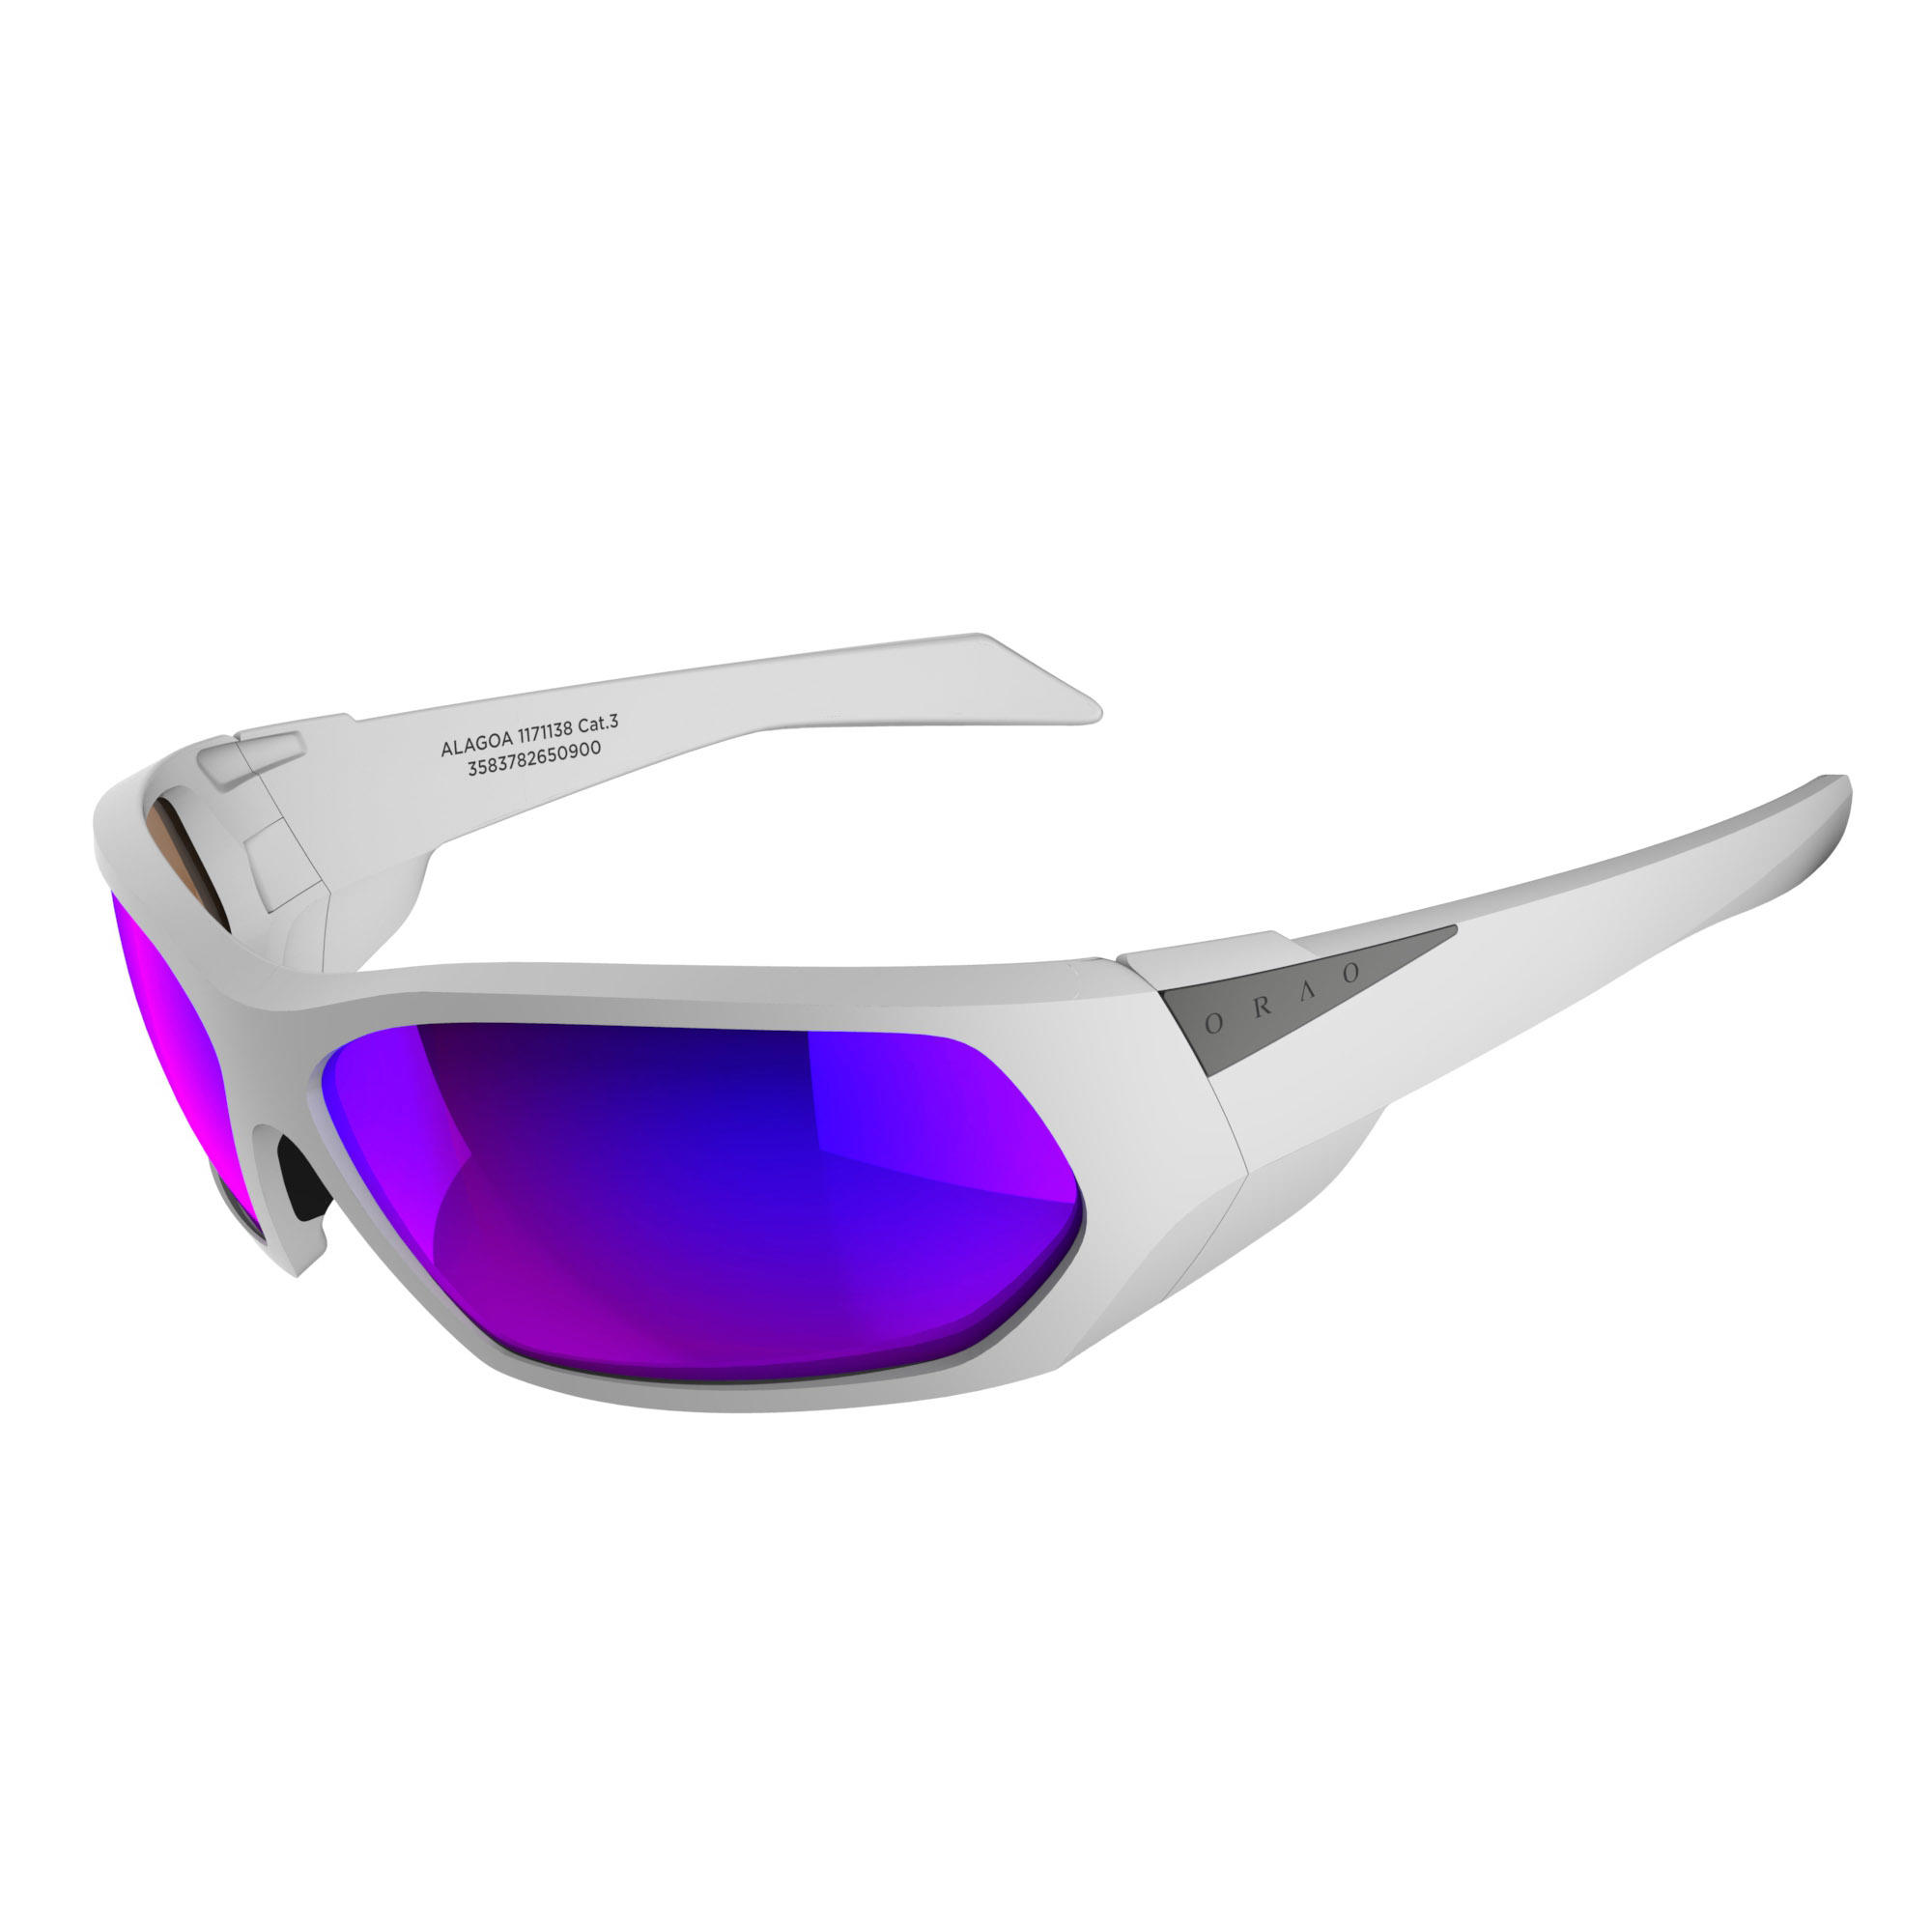 NO BRAND ALAGOA Adult Floatable Water Sports Sunglasses - White Polarised